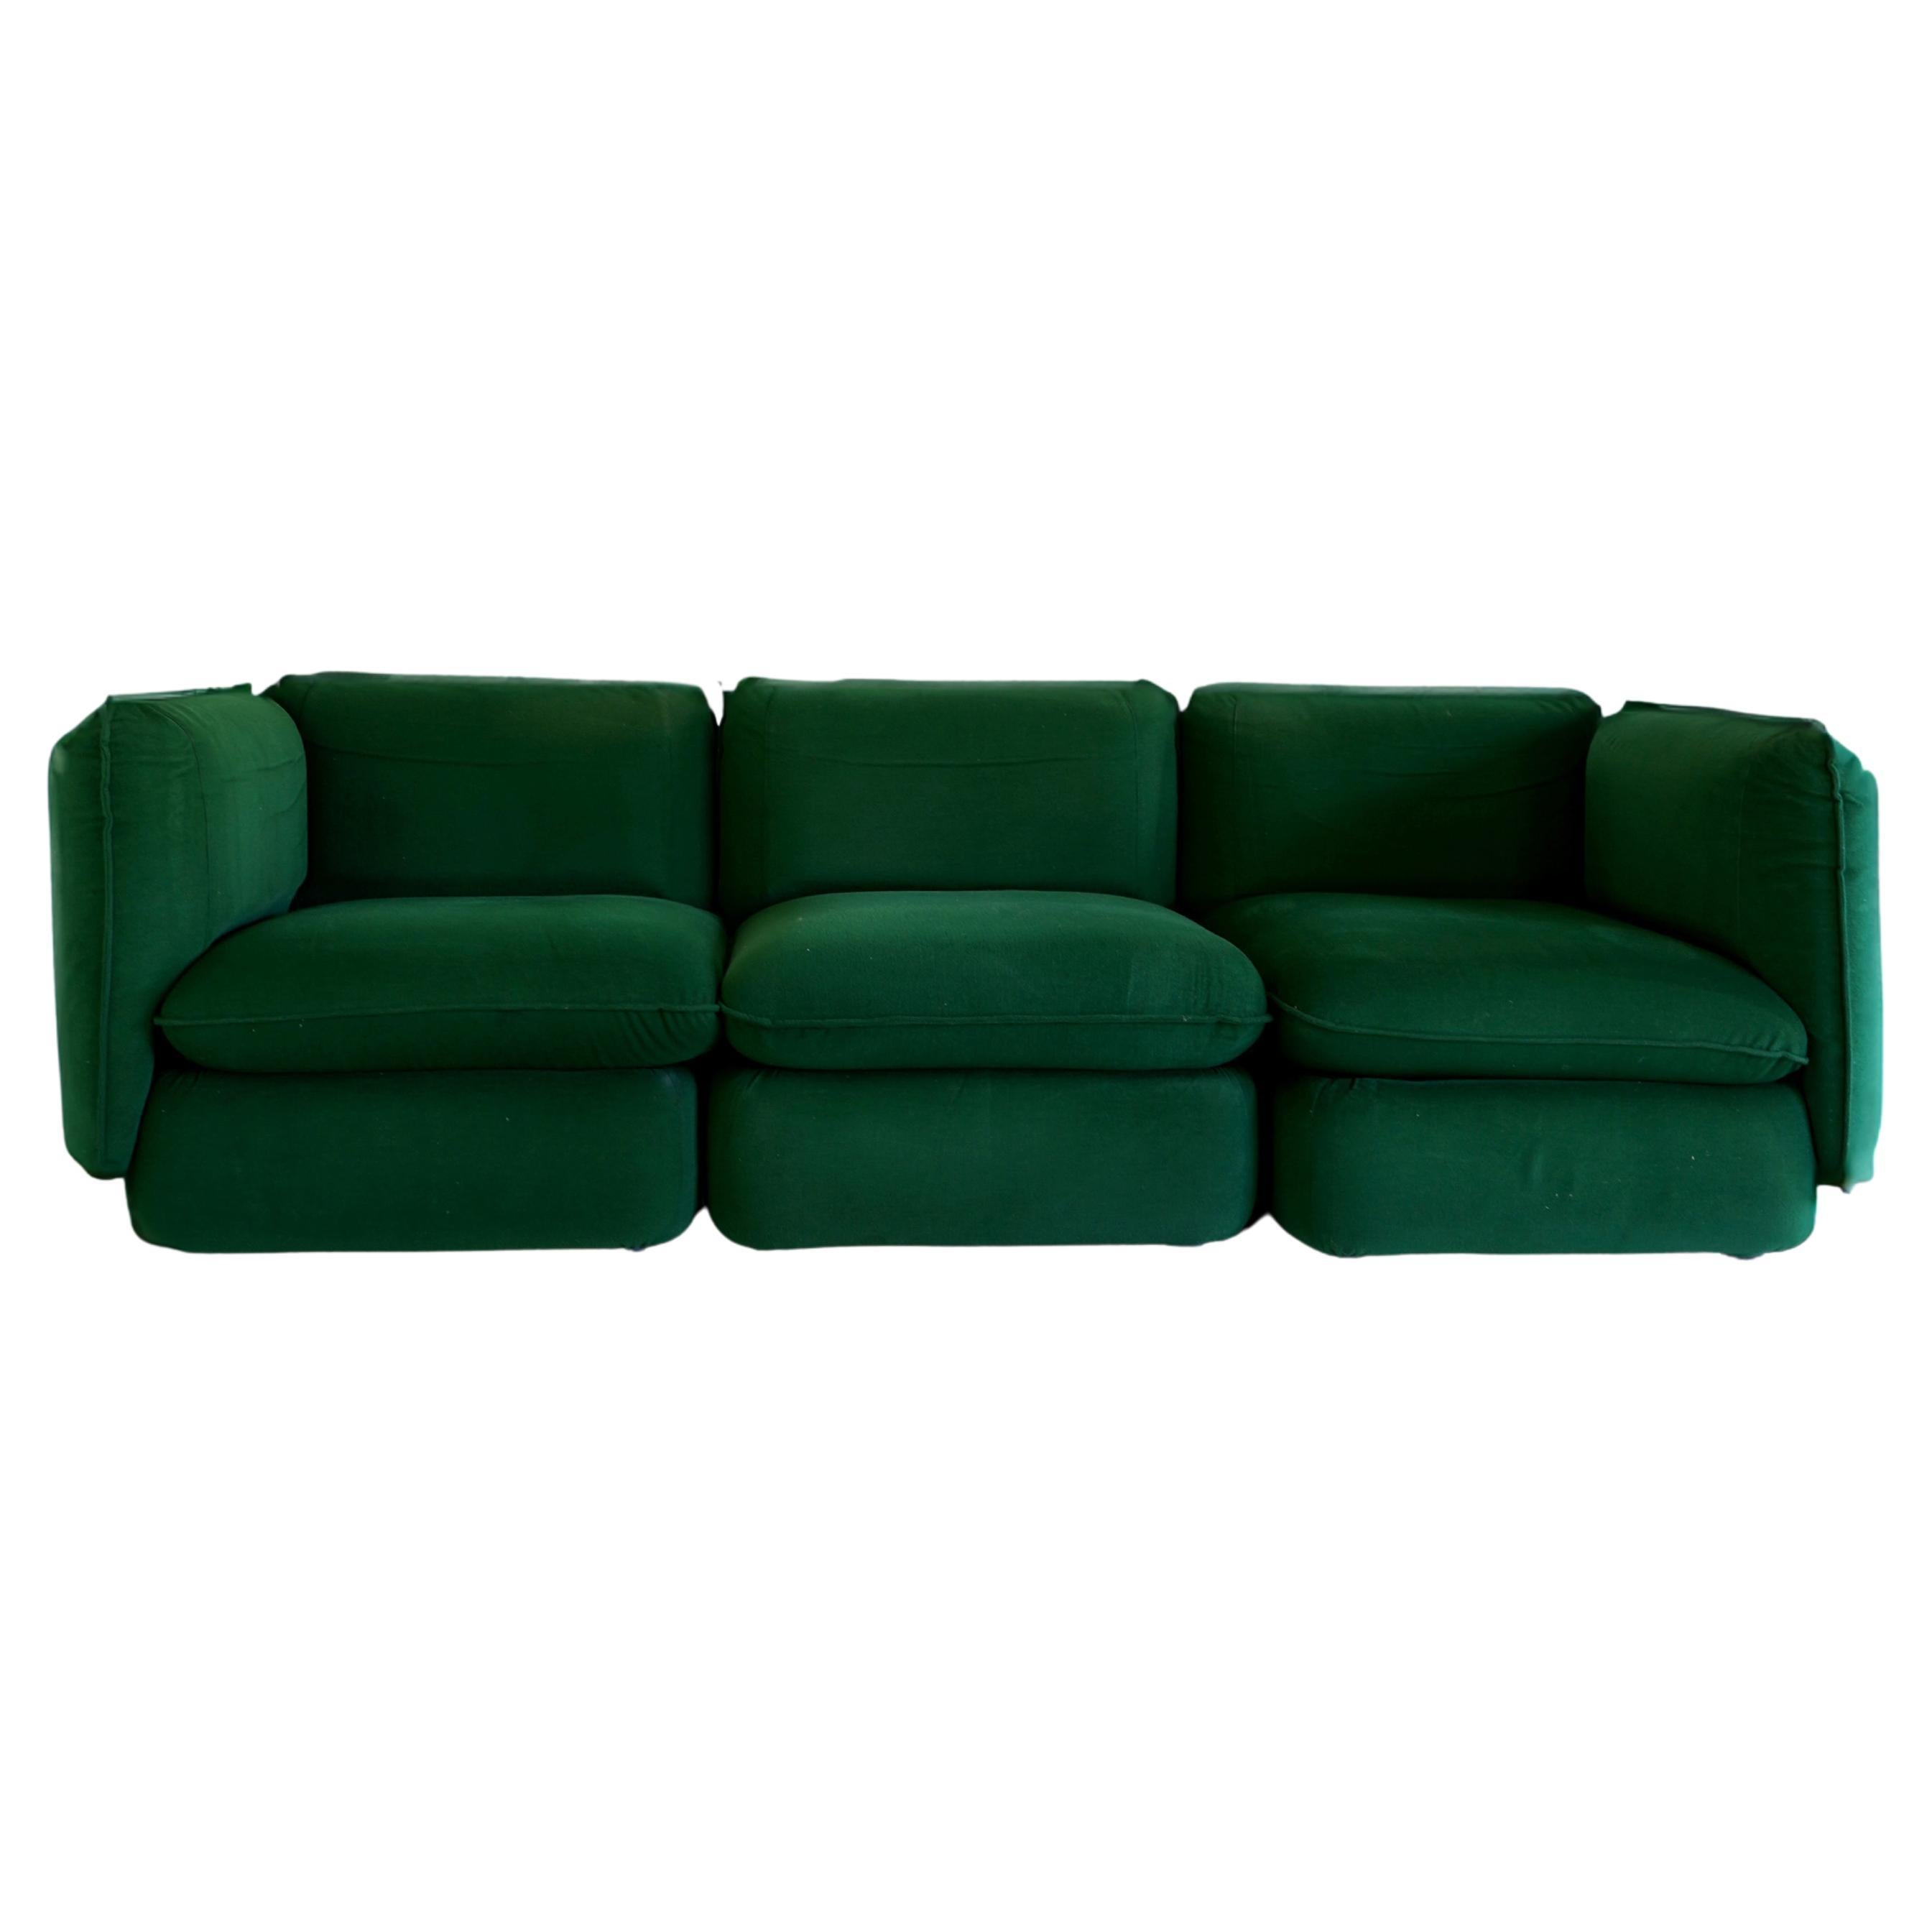 Modular 3 - Seat Sofa in Green Chenille, IPE Cavalli, Italy For Sale